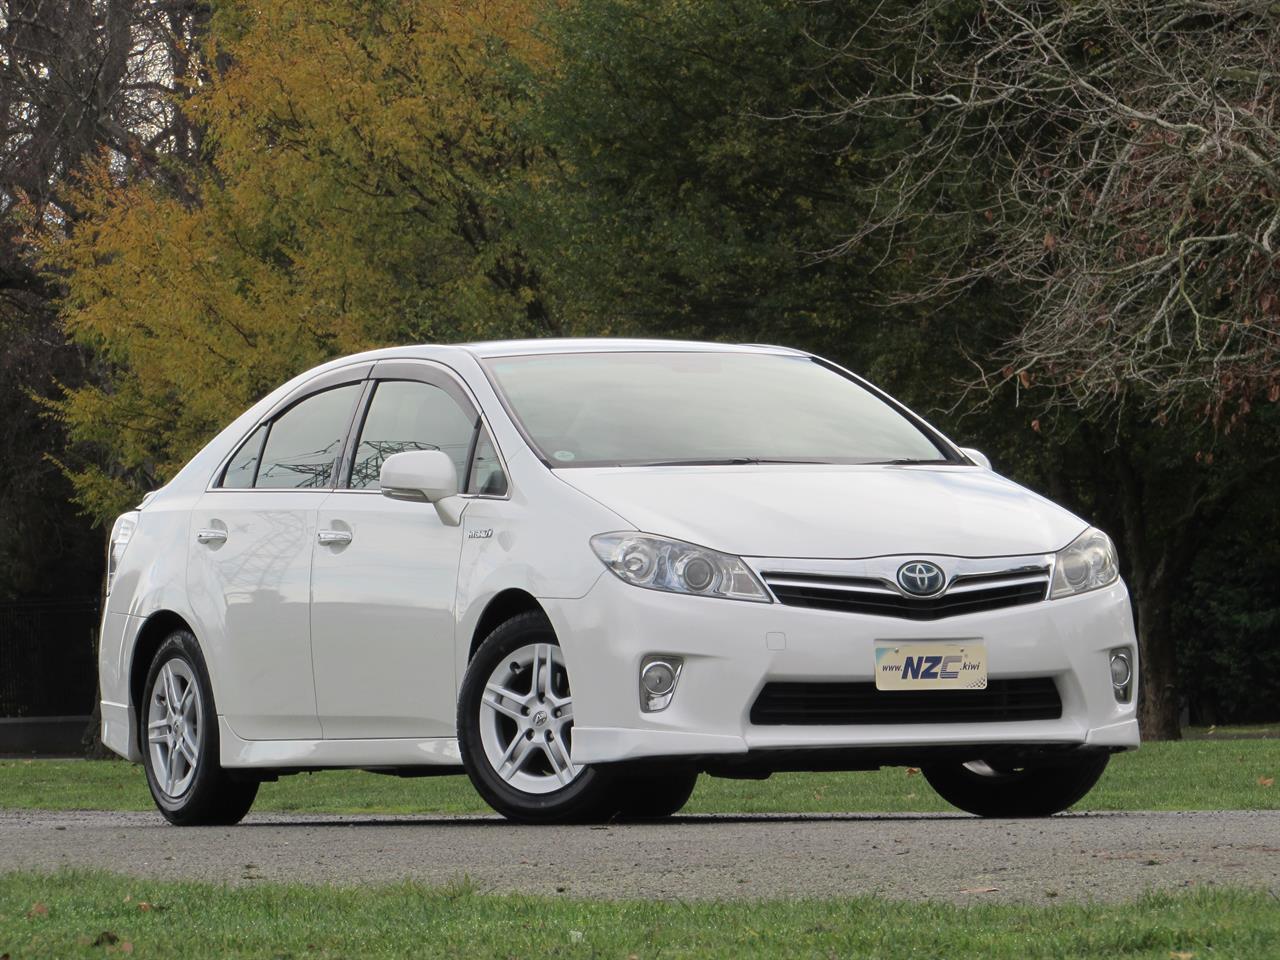 NZC best hot price for 2011 Toyota SAI in Christchurch